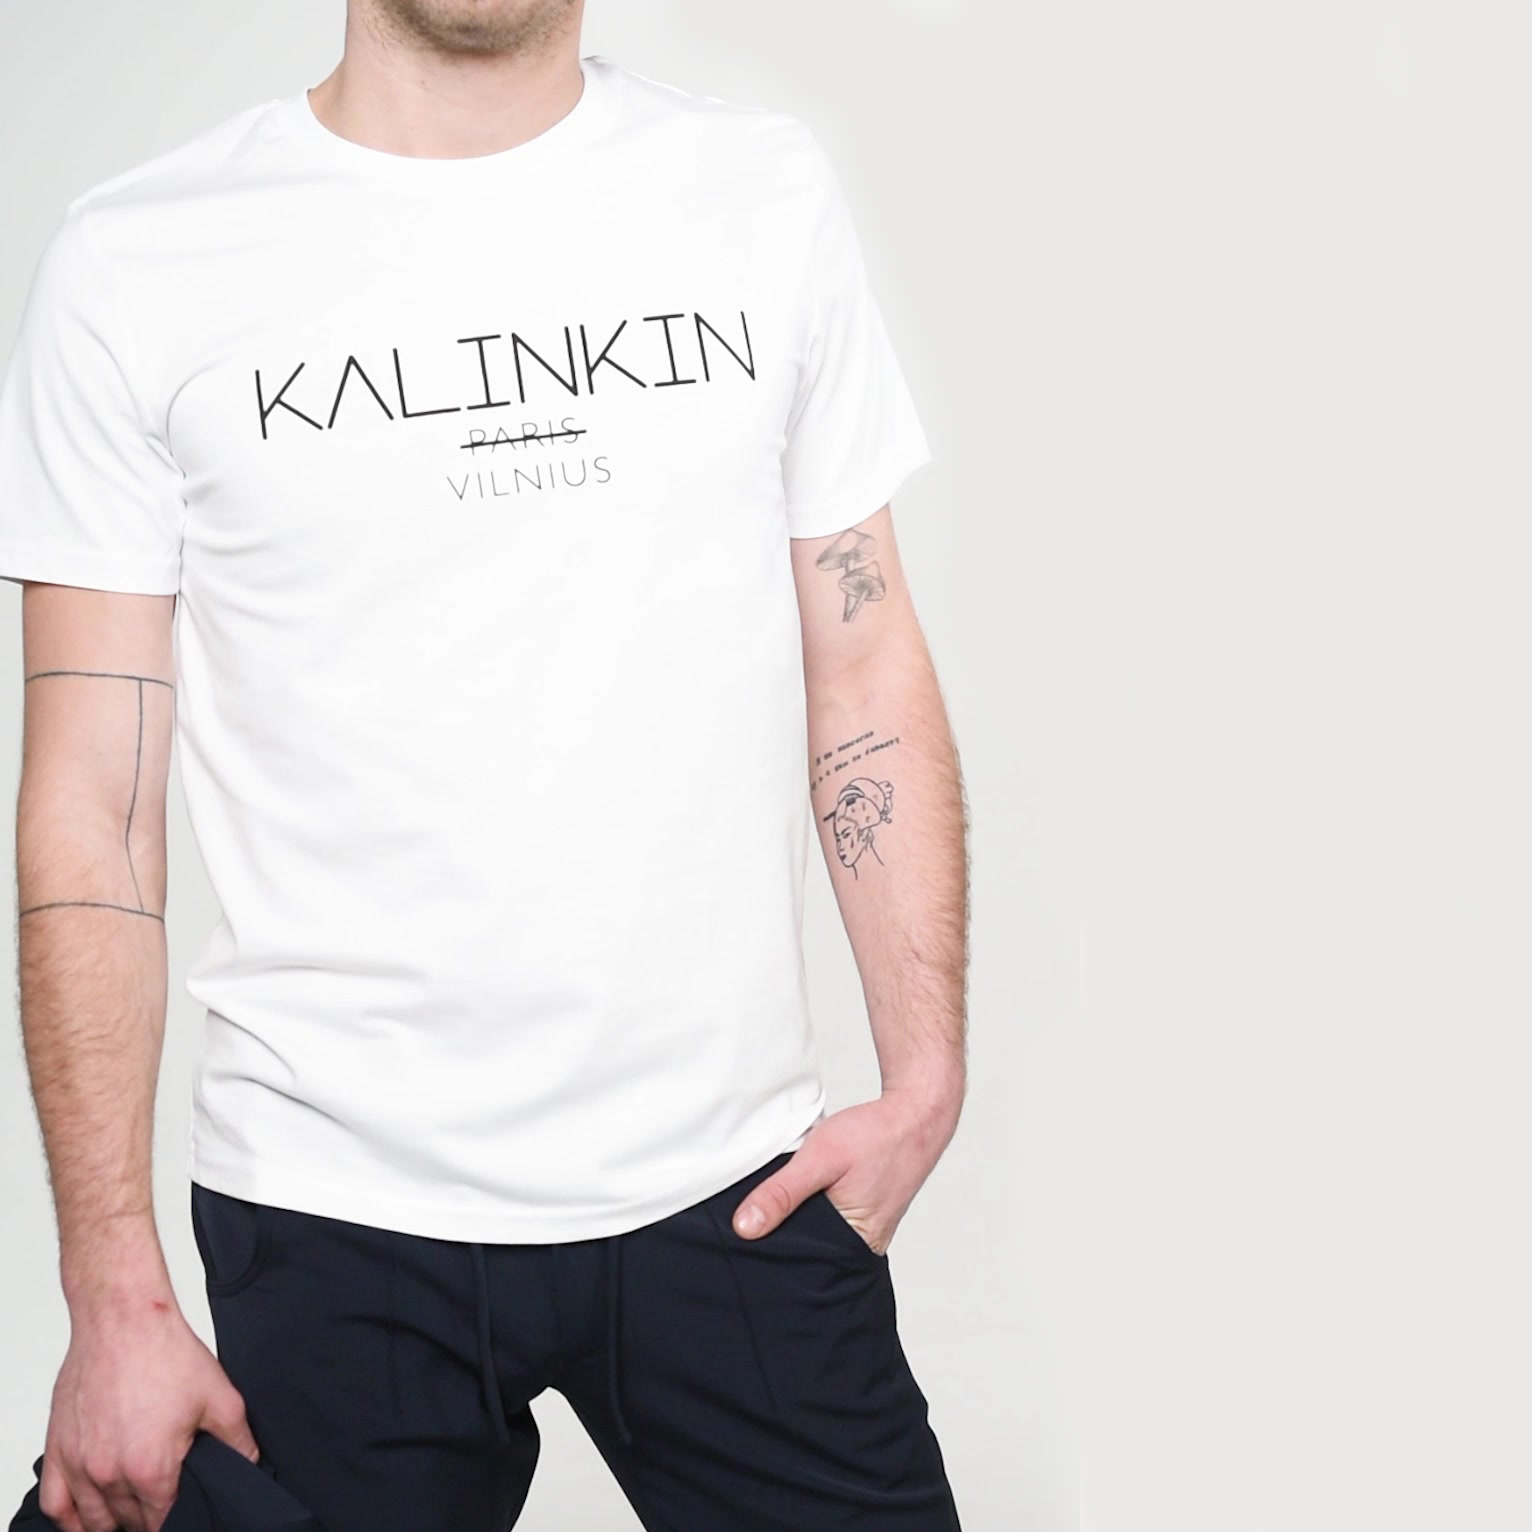 KALINKIN VILNIUS T-shirt white, UNISEX